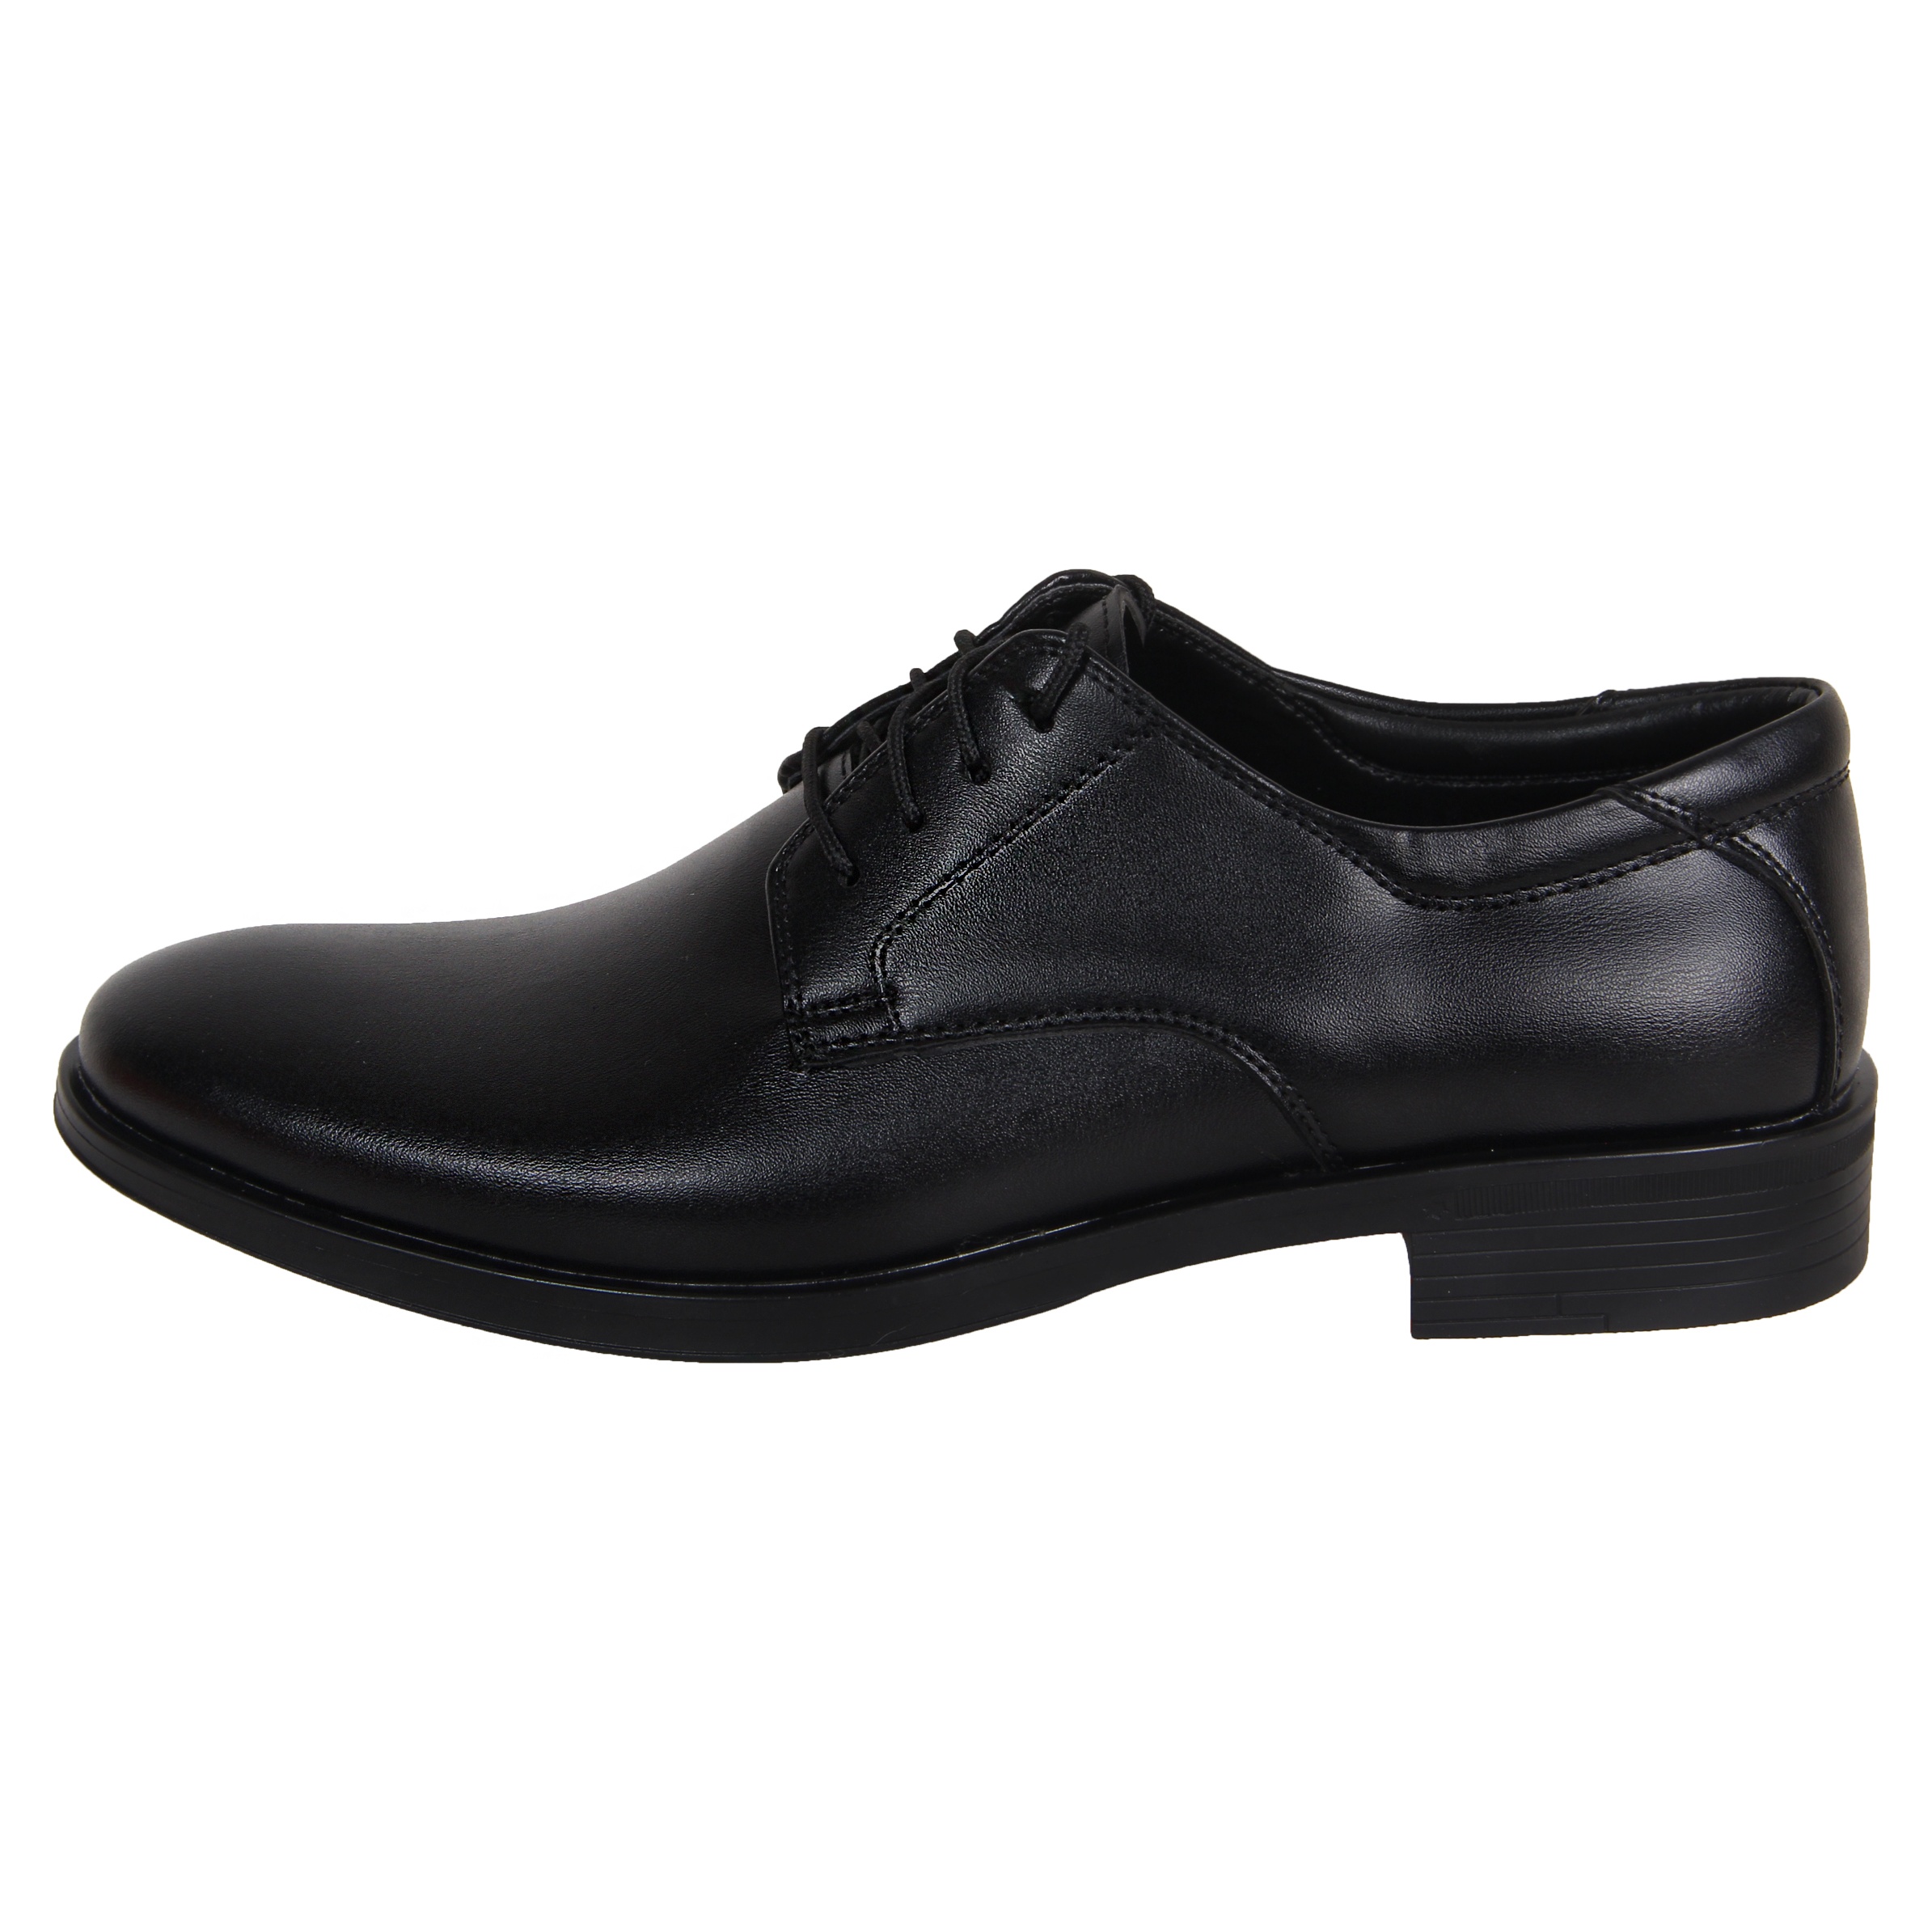 کفش مردانه کد R615-1